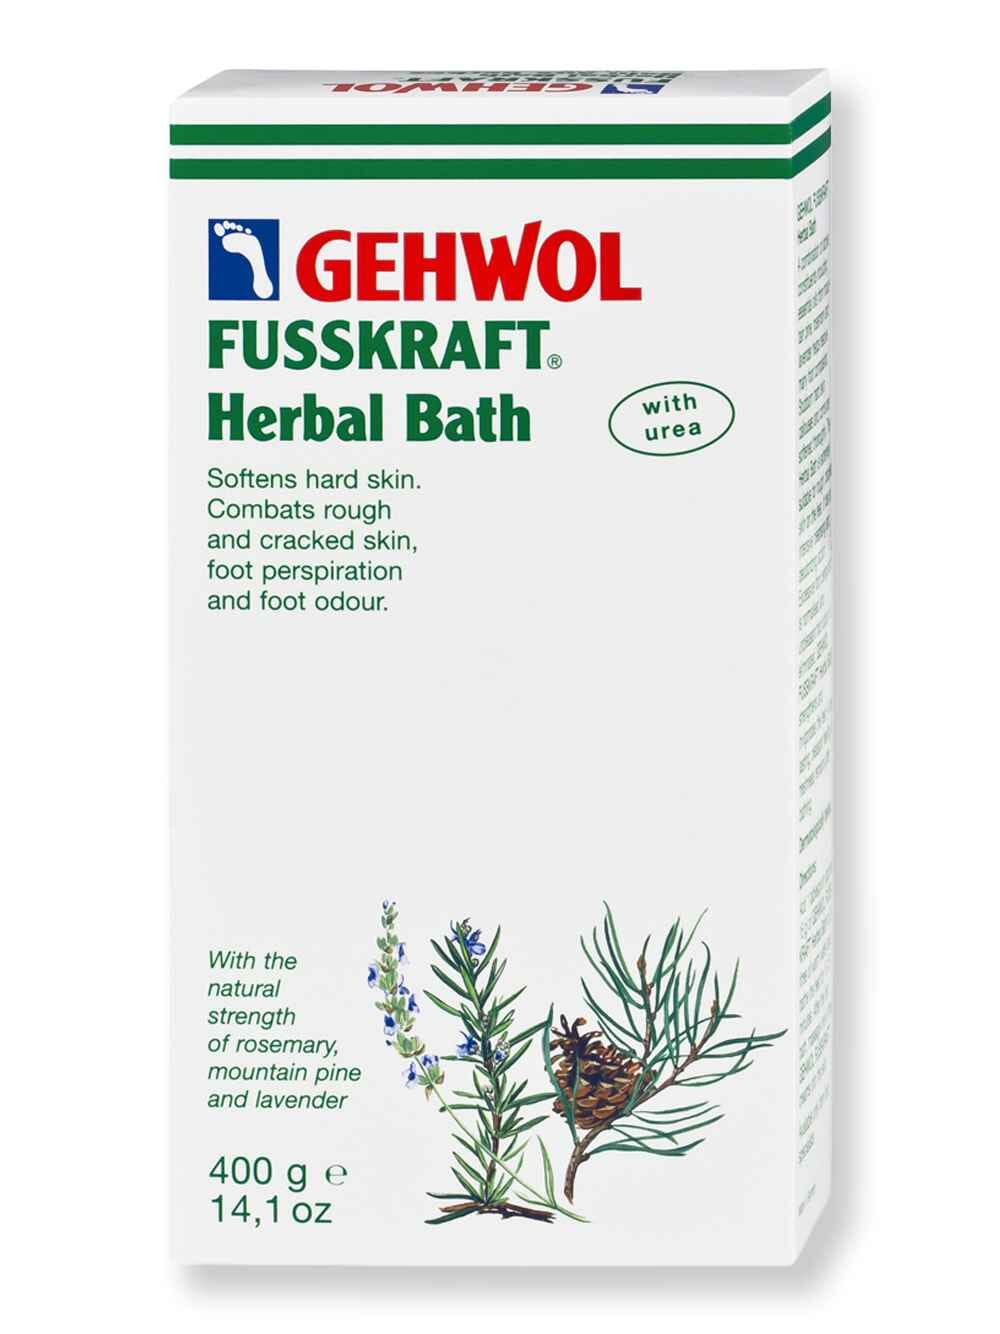 Gehwol Gehwol Fusskraft Herbal Bath 14.1 oz400 g Foot Creams & Treatments 